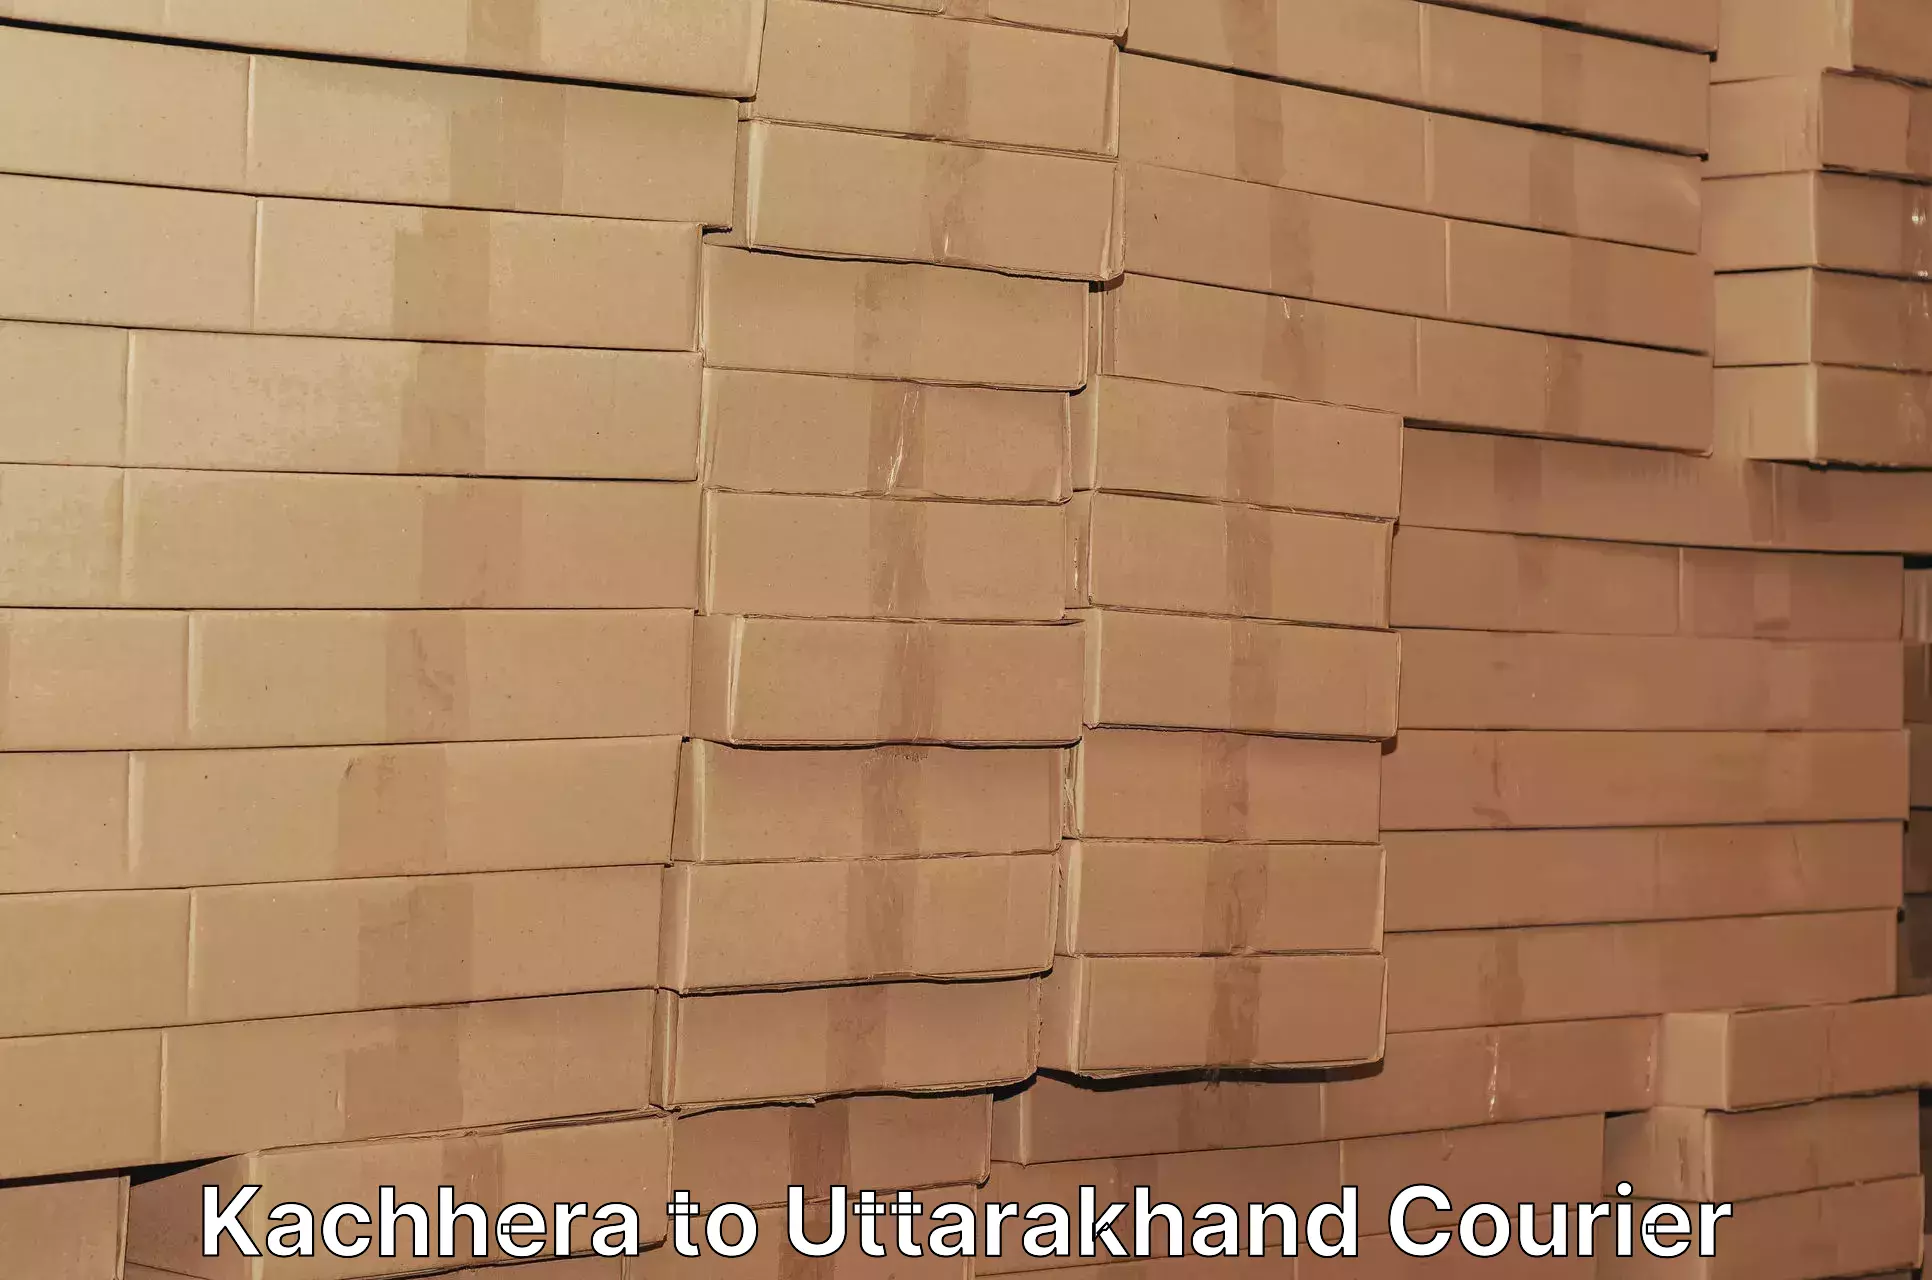 Courier service booking Kachhera to Uttarakhand